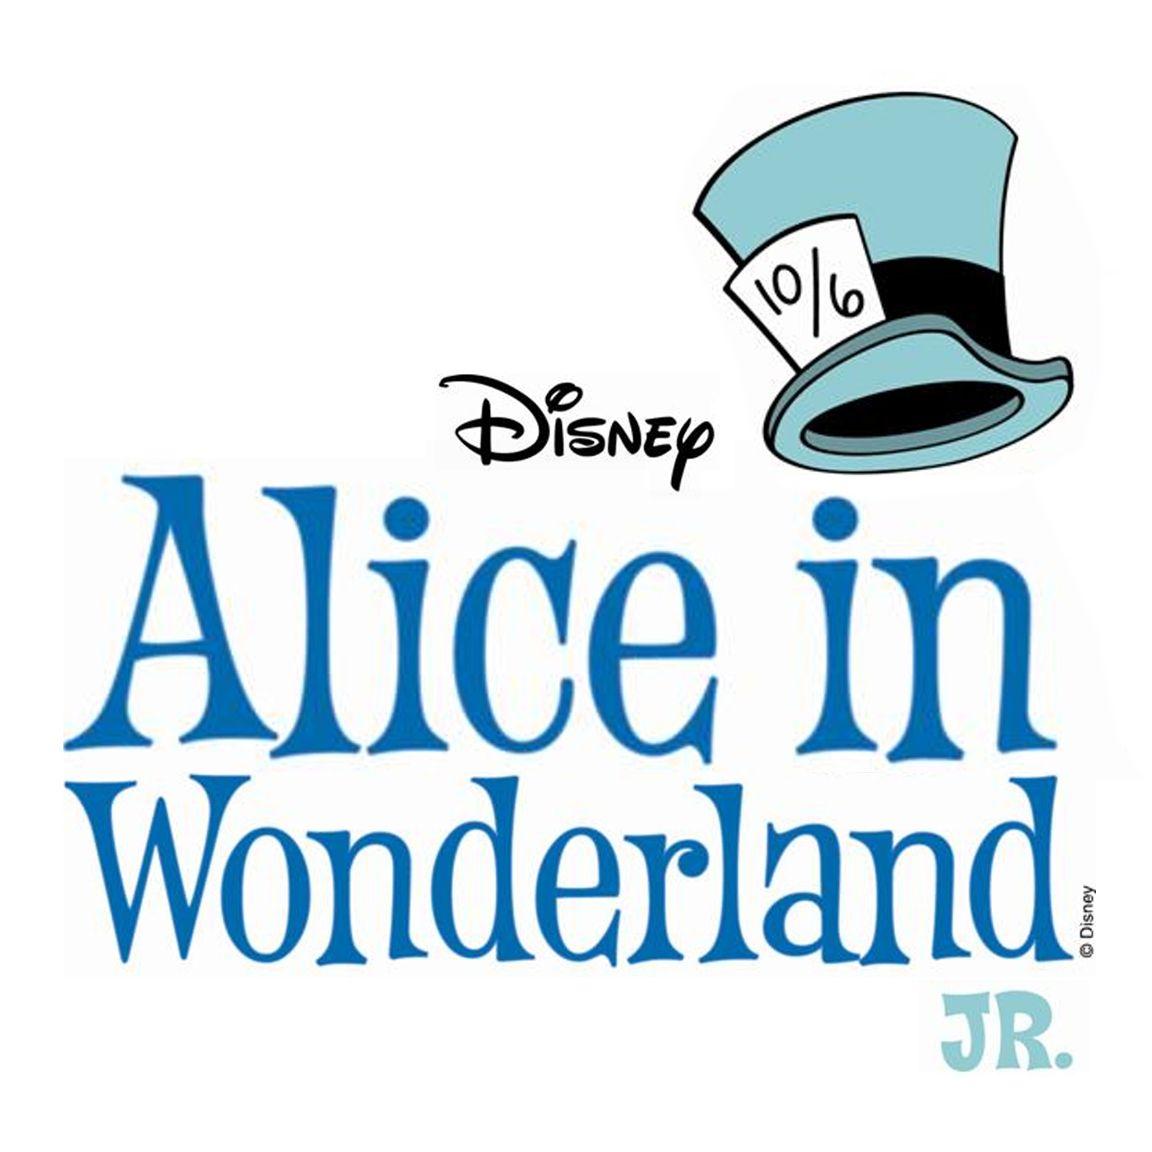 Disney's Alice in Wonderland Logo - St Michael's CE Middle School presents Disney's 'Alice in Wonderland